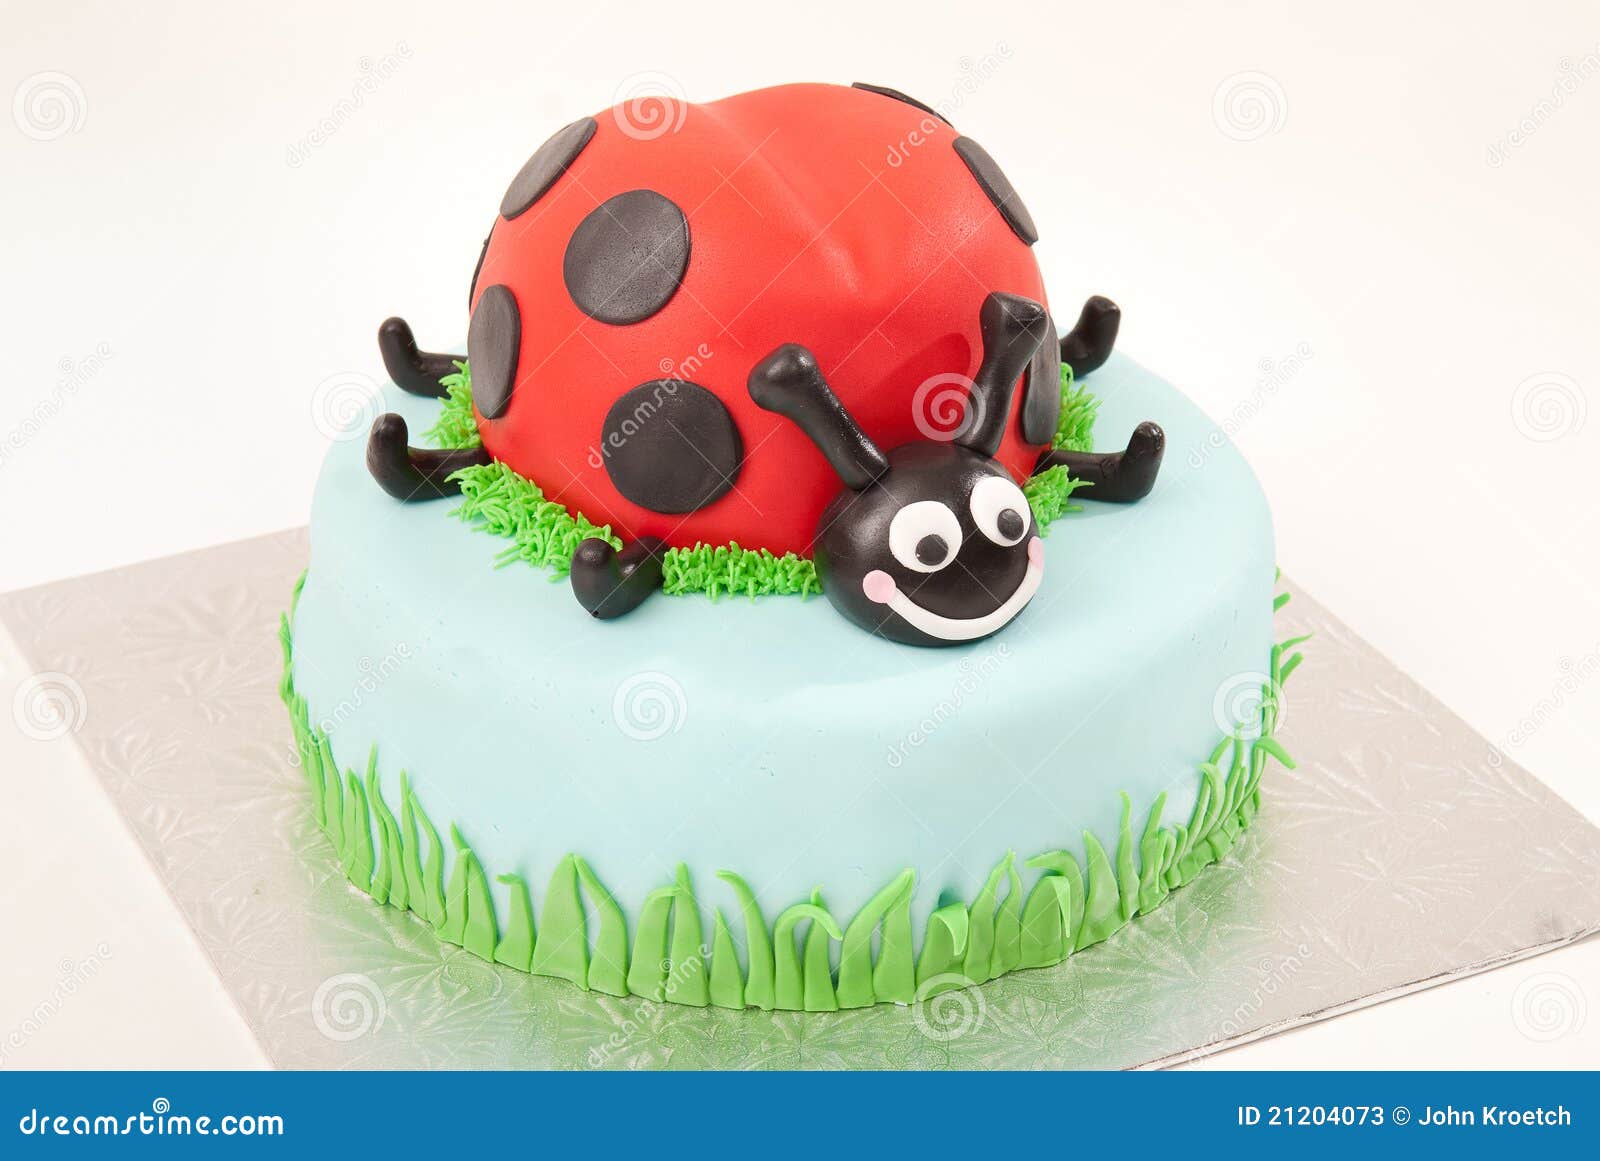 Rewari bakery - Oggy & Cockroach Theme cake !! A Birthday... | Facebook